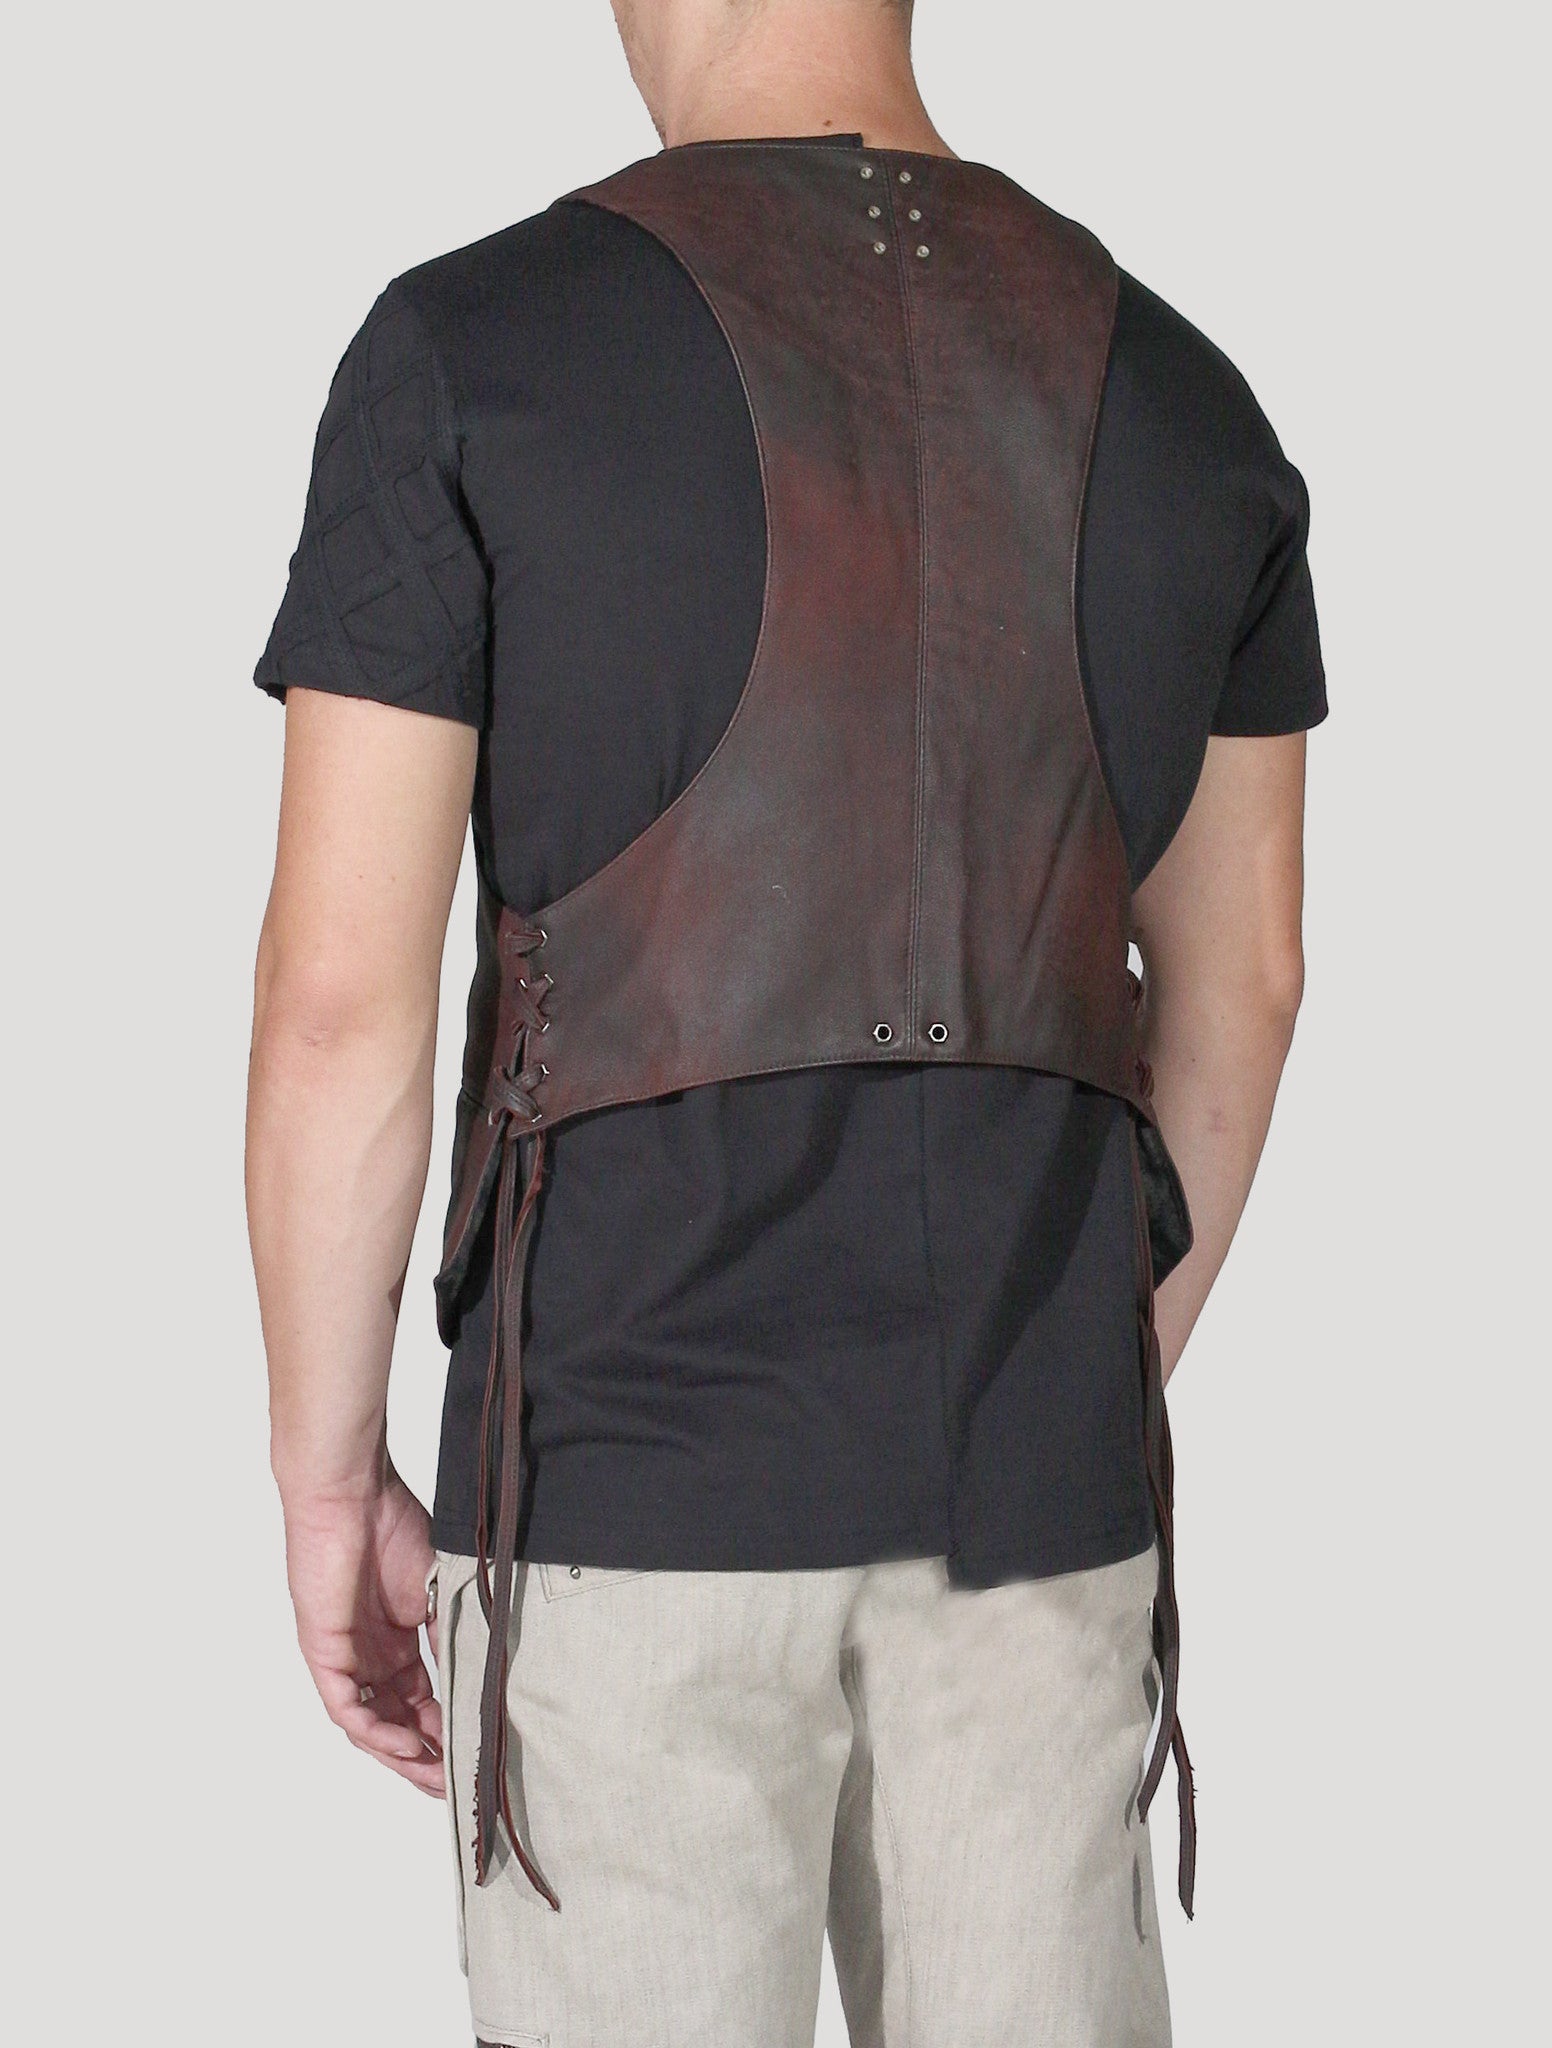 Jah RMX Leather Vest - Psylo Fashion